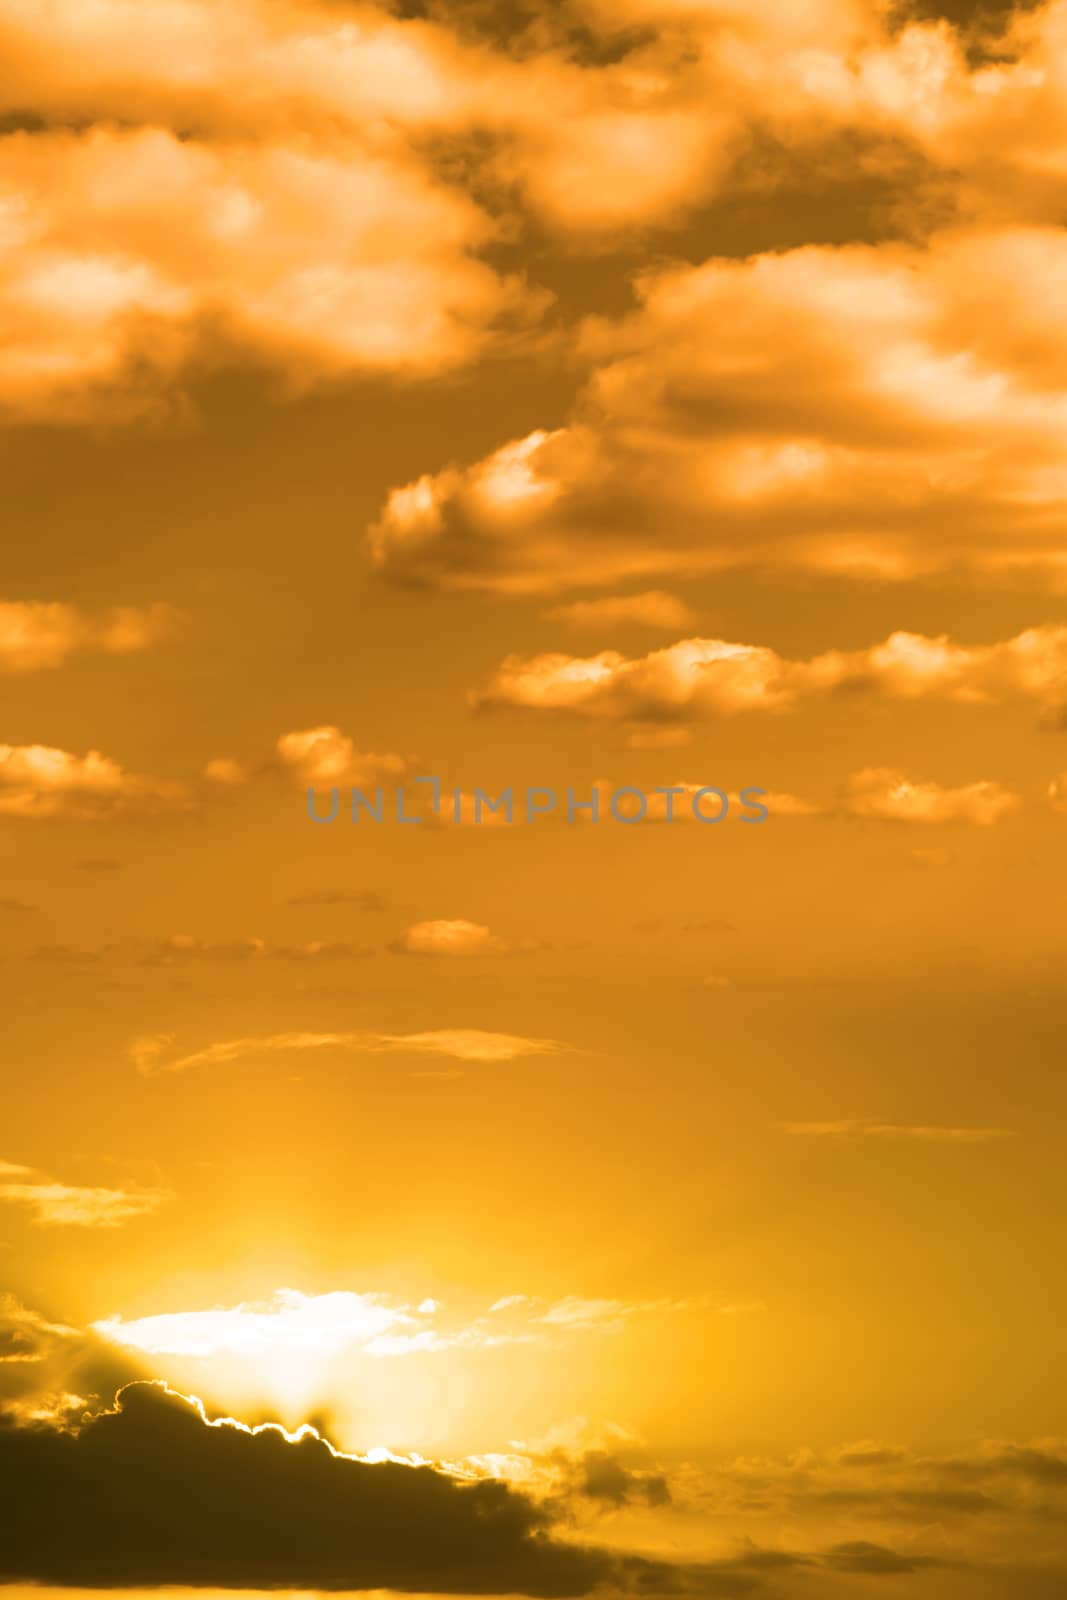 beautiful cloudy orange sunset sky in the wild Atlantic way, Ireland with sunbeams